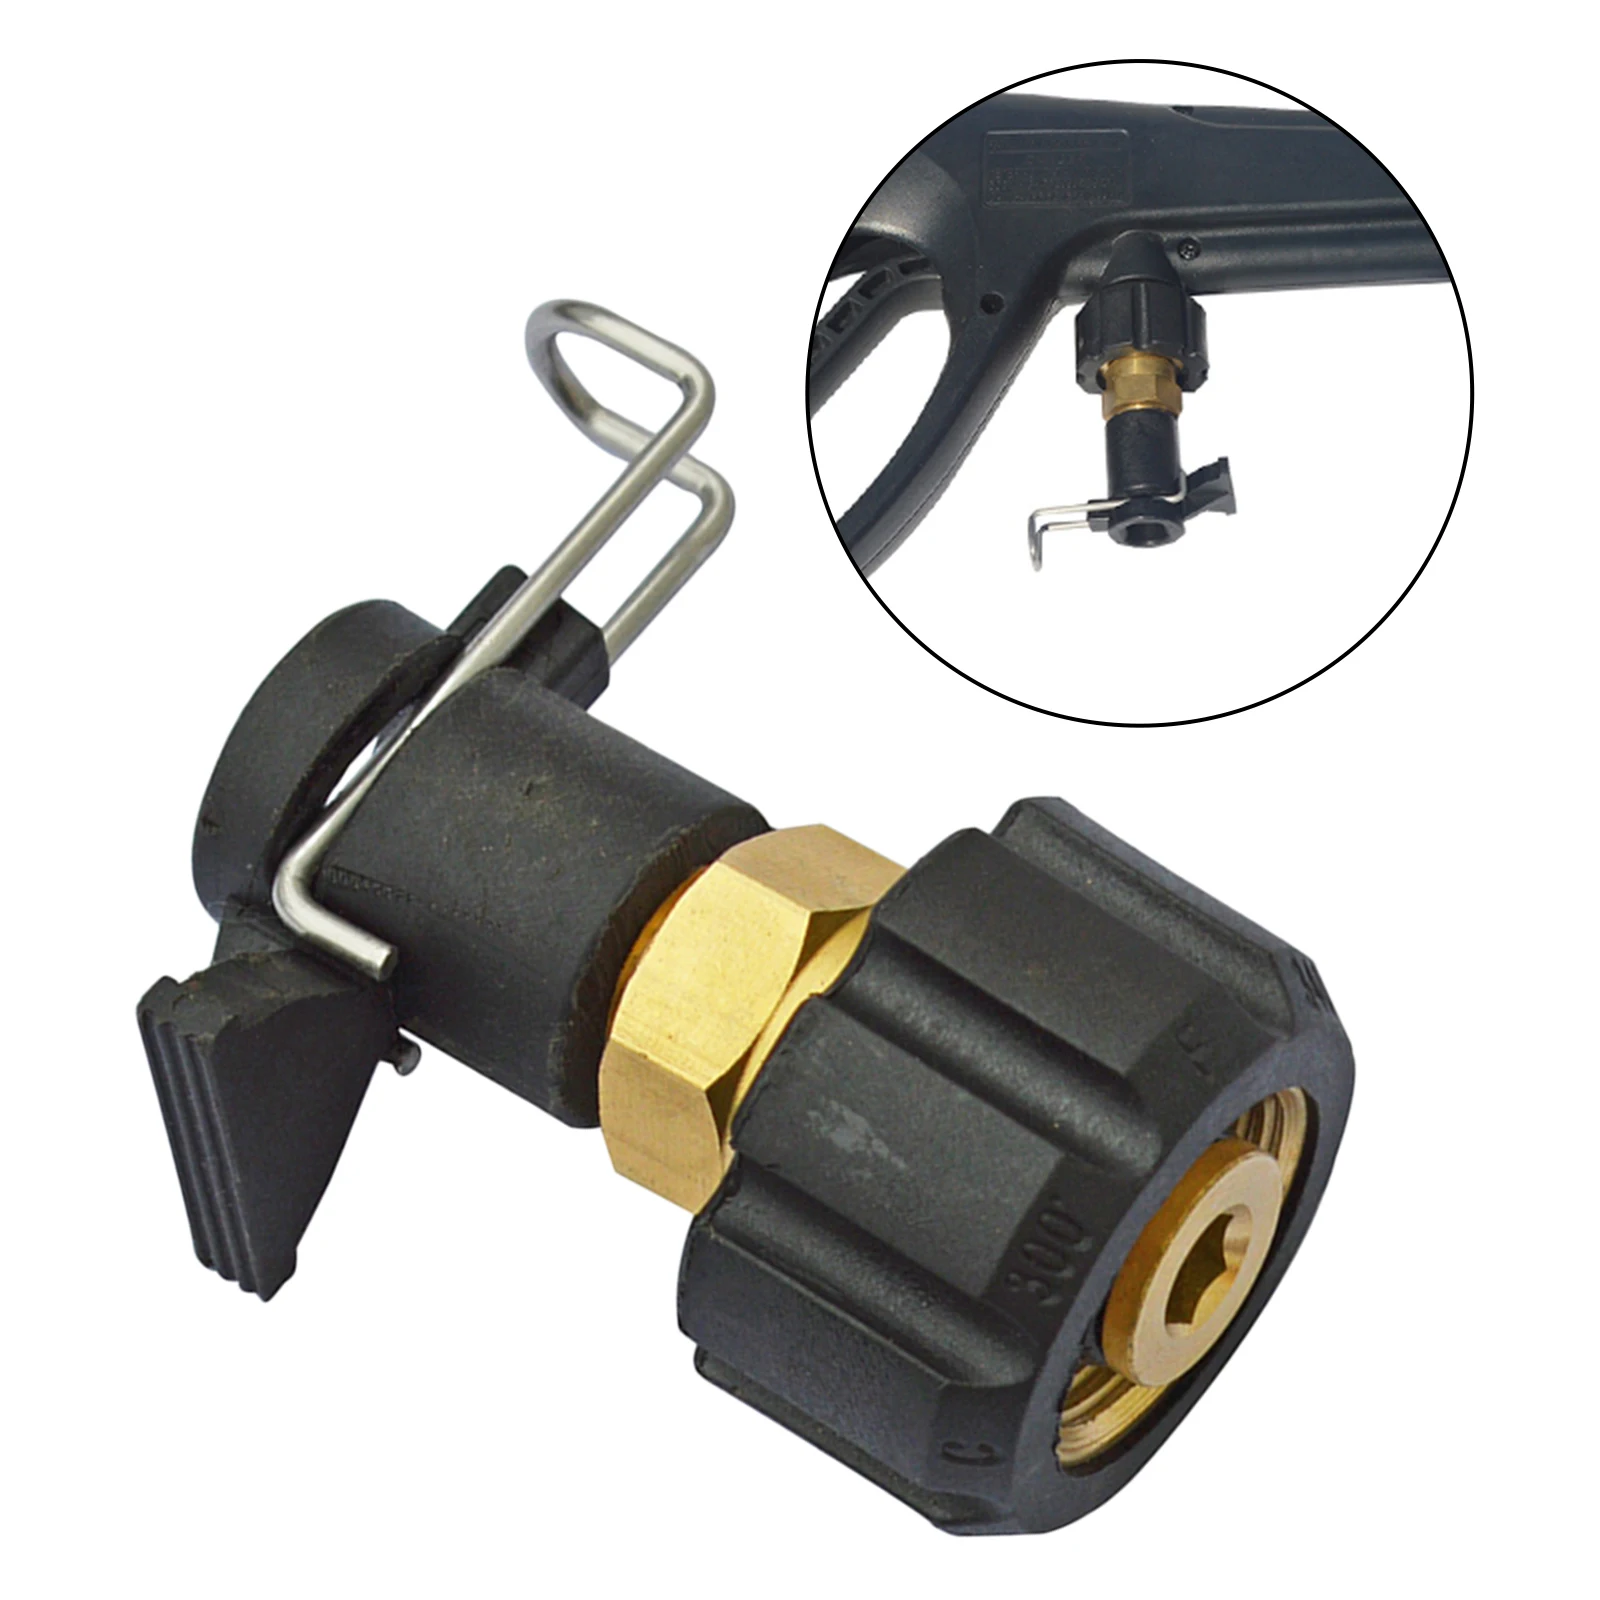 Pressure Washer Outlet Hose Connector Converter Adapter for Car Washer